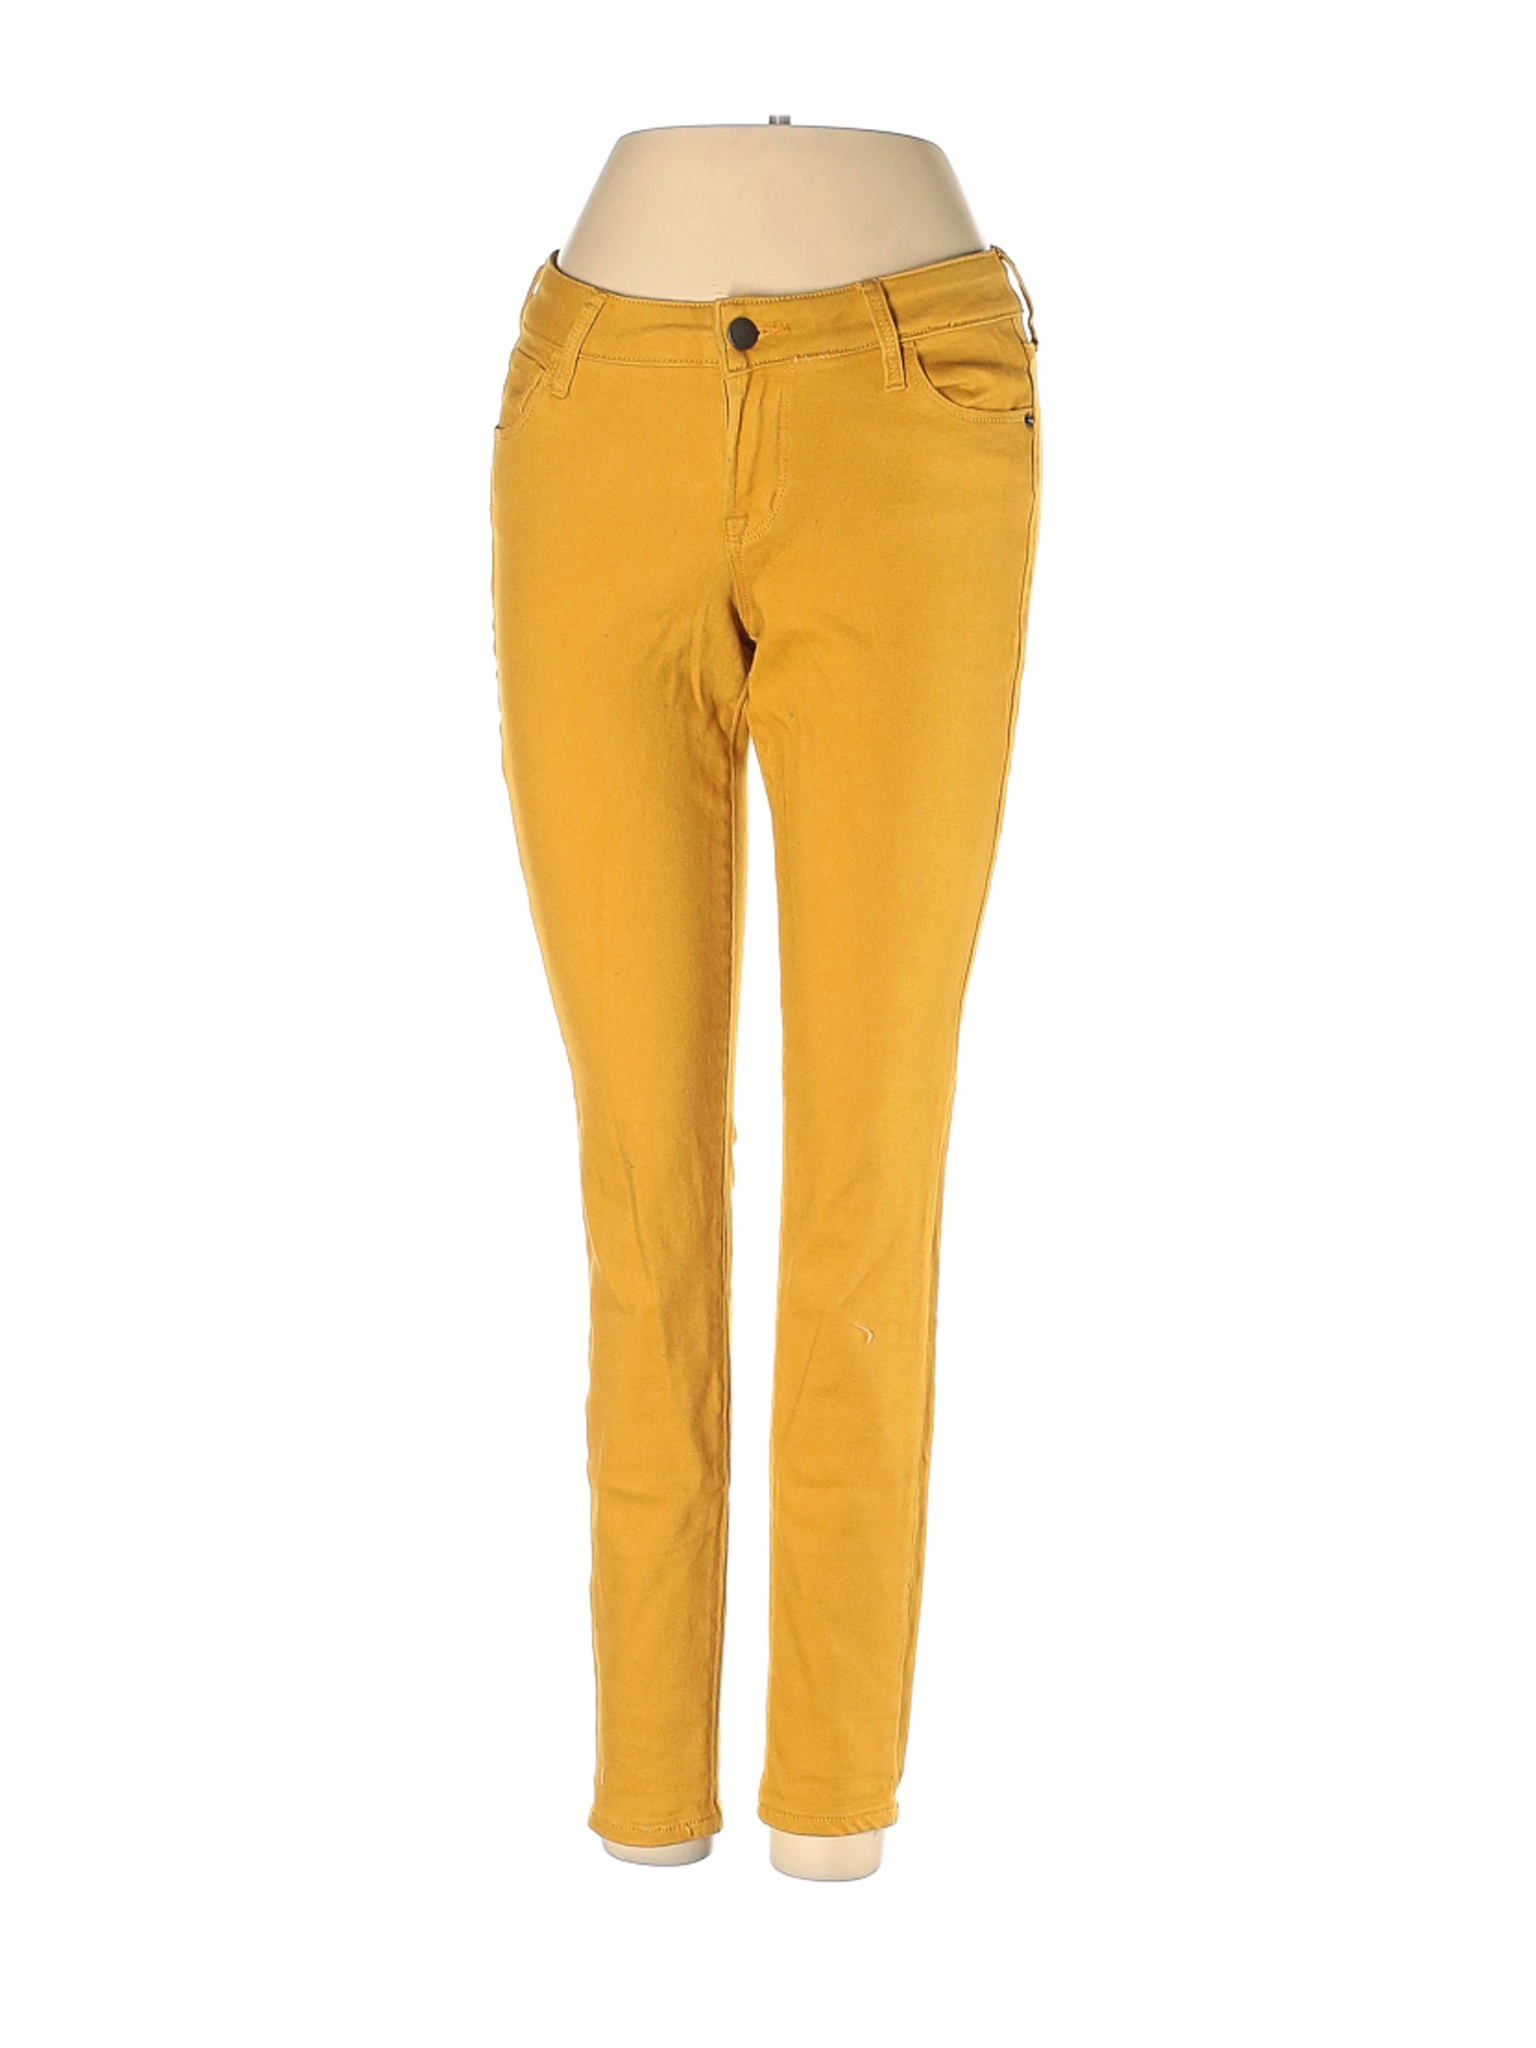 Old Navy Women Yellow Jeans 0 Petites | eBay